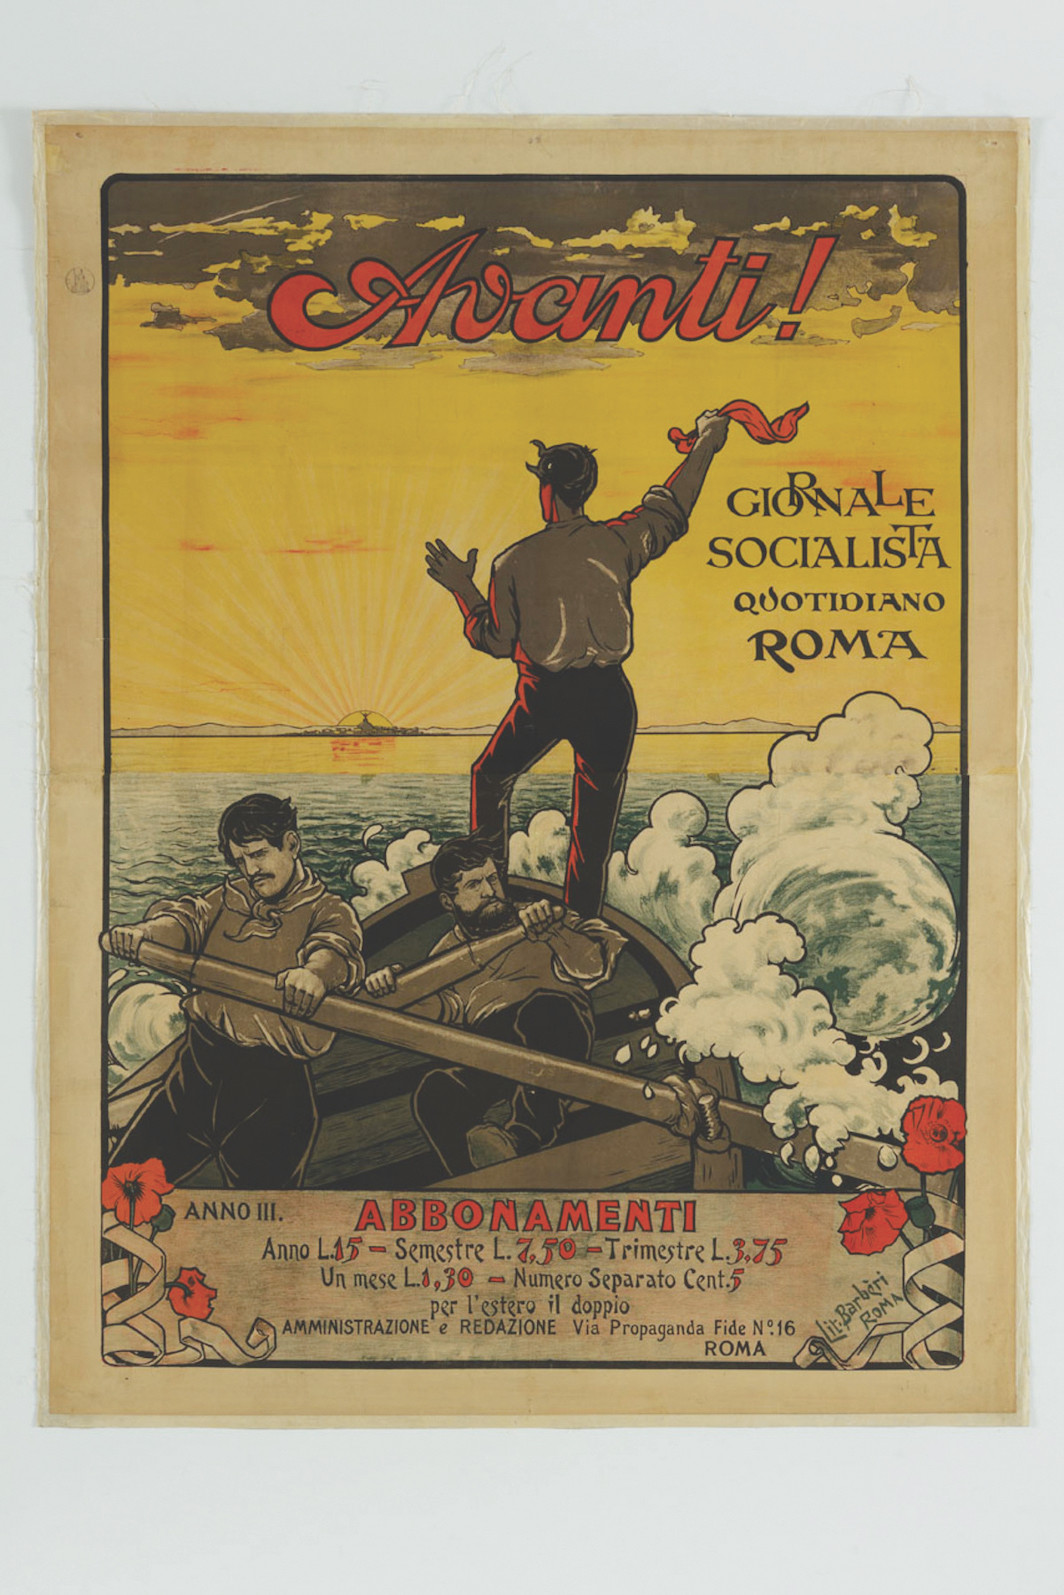 Cover of Avanti!, 1898.